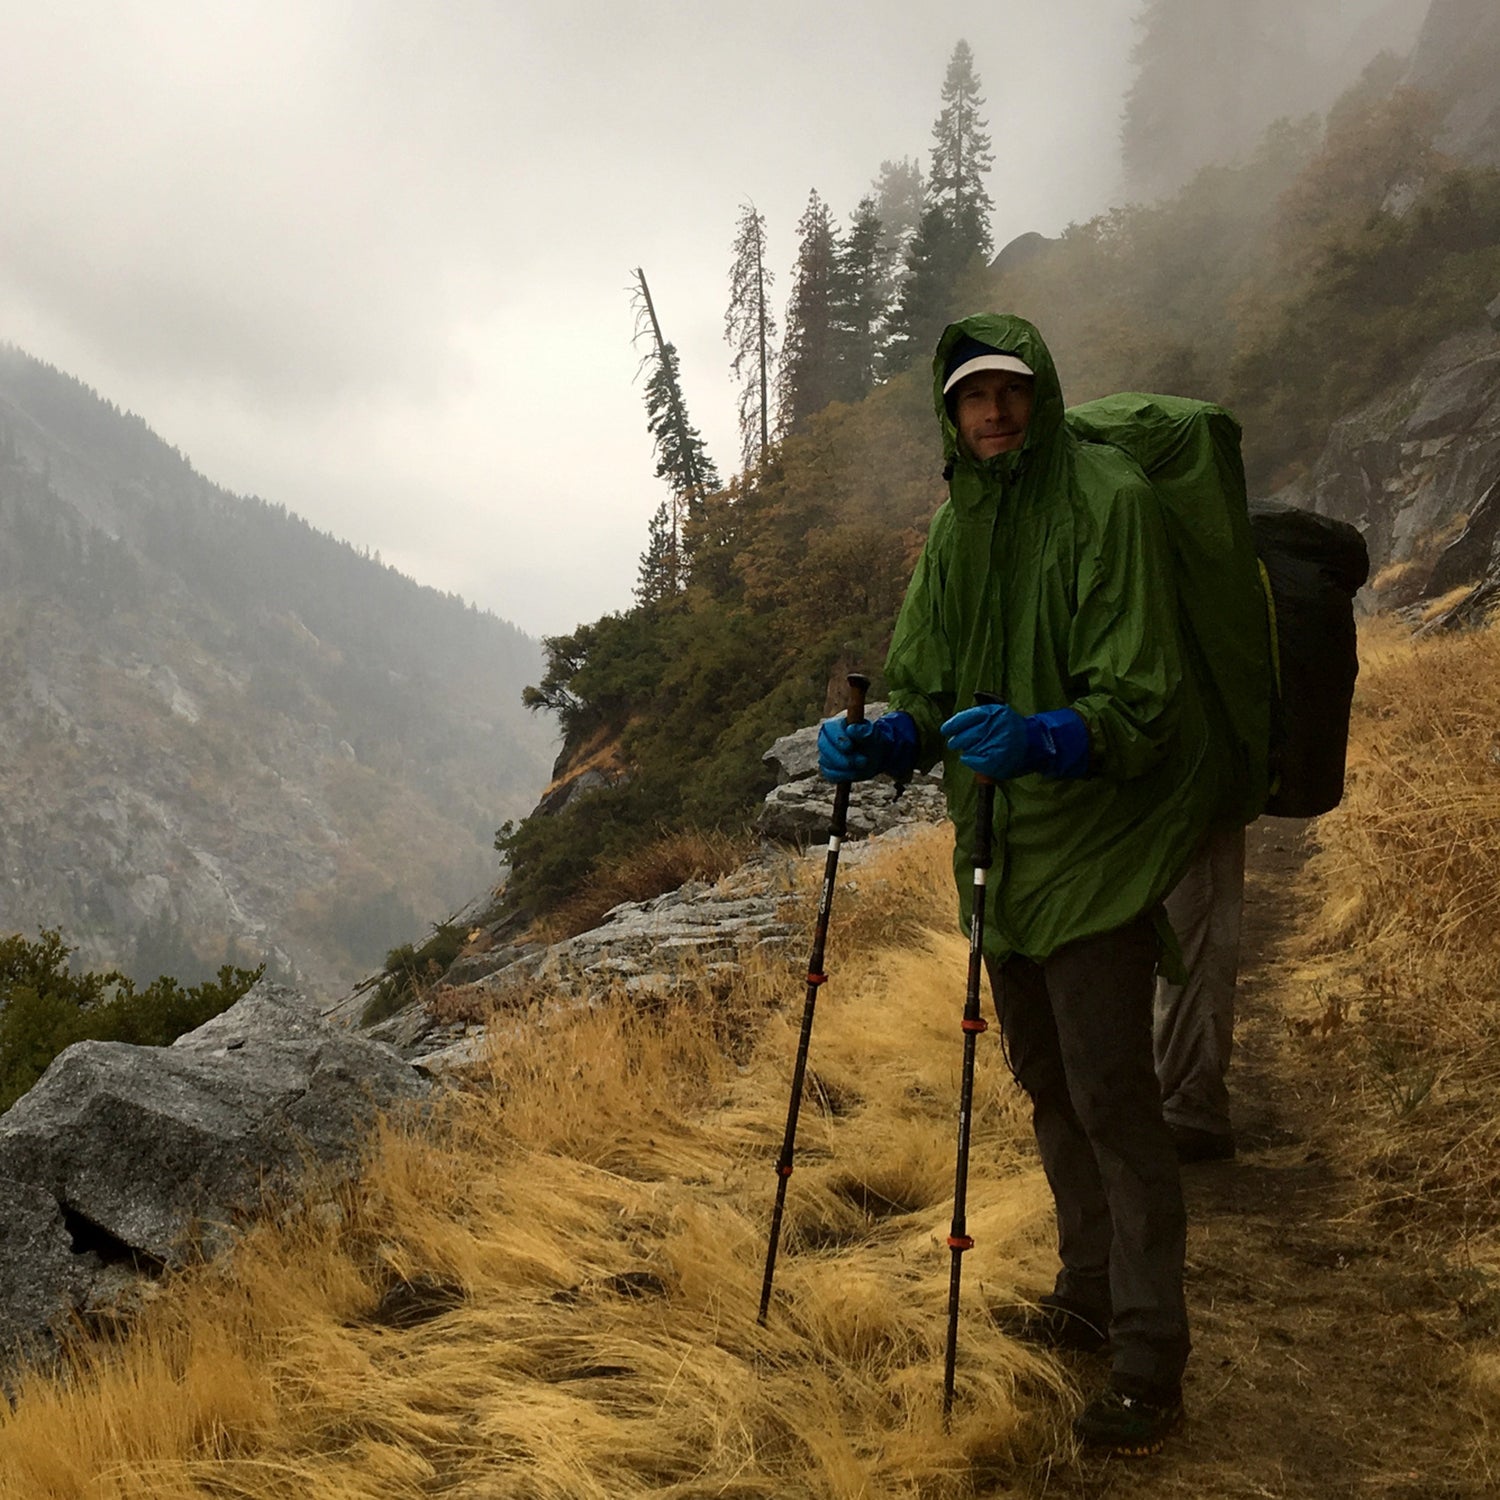 Hands-free trekking umbrella - The Fog Watch